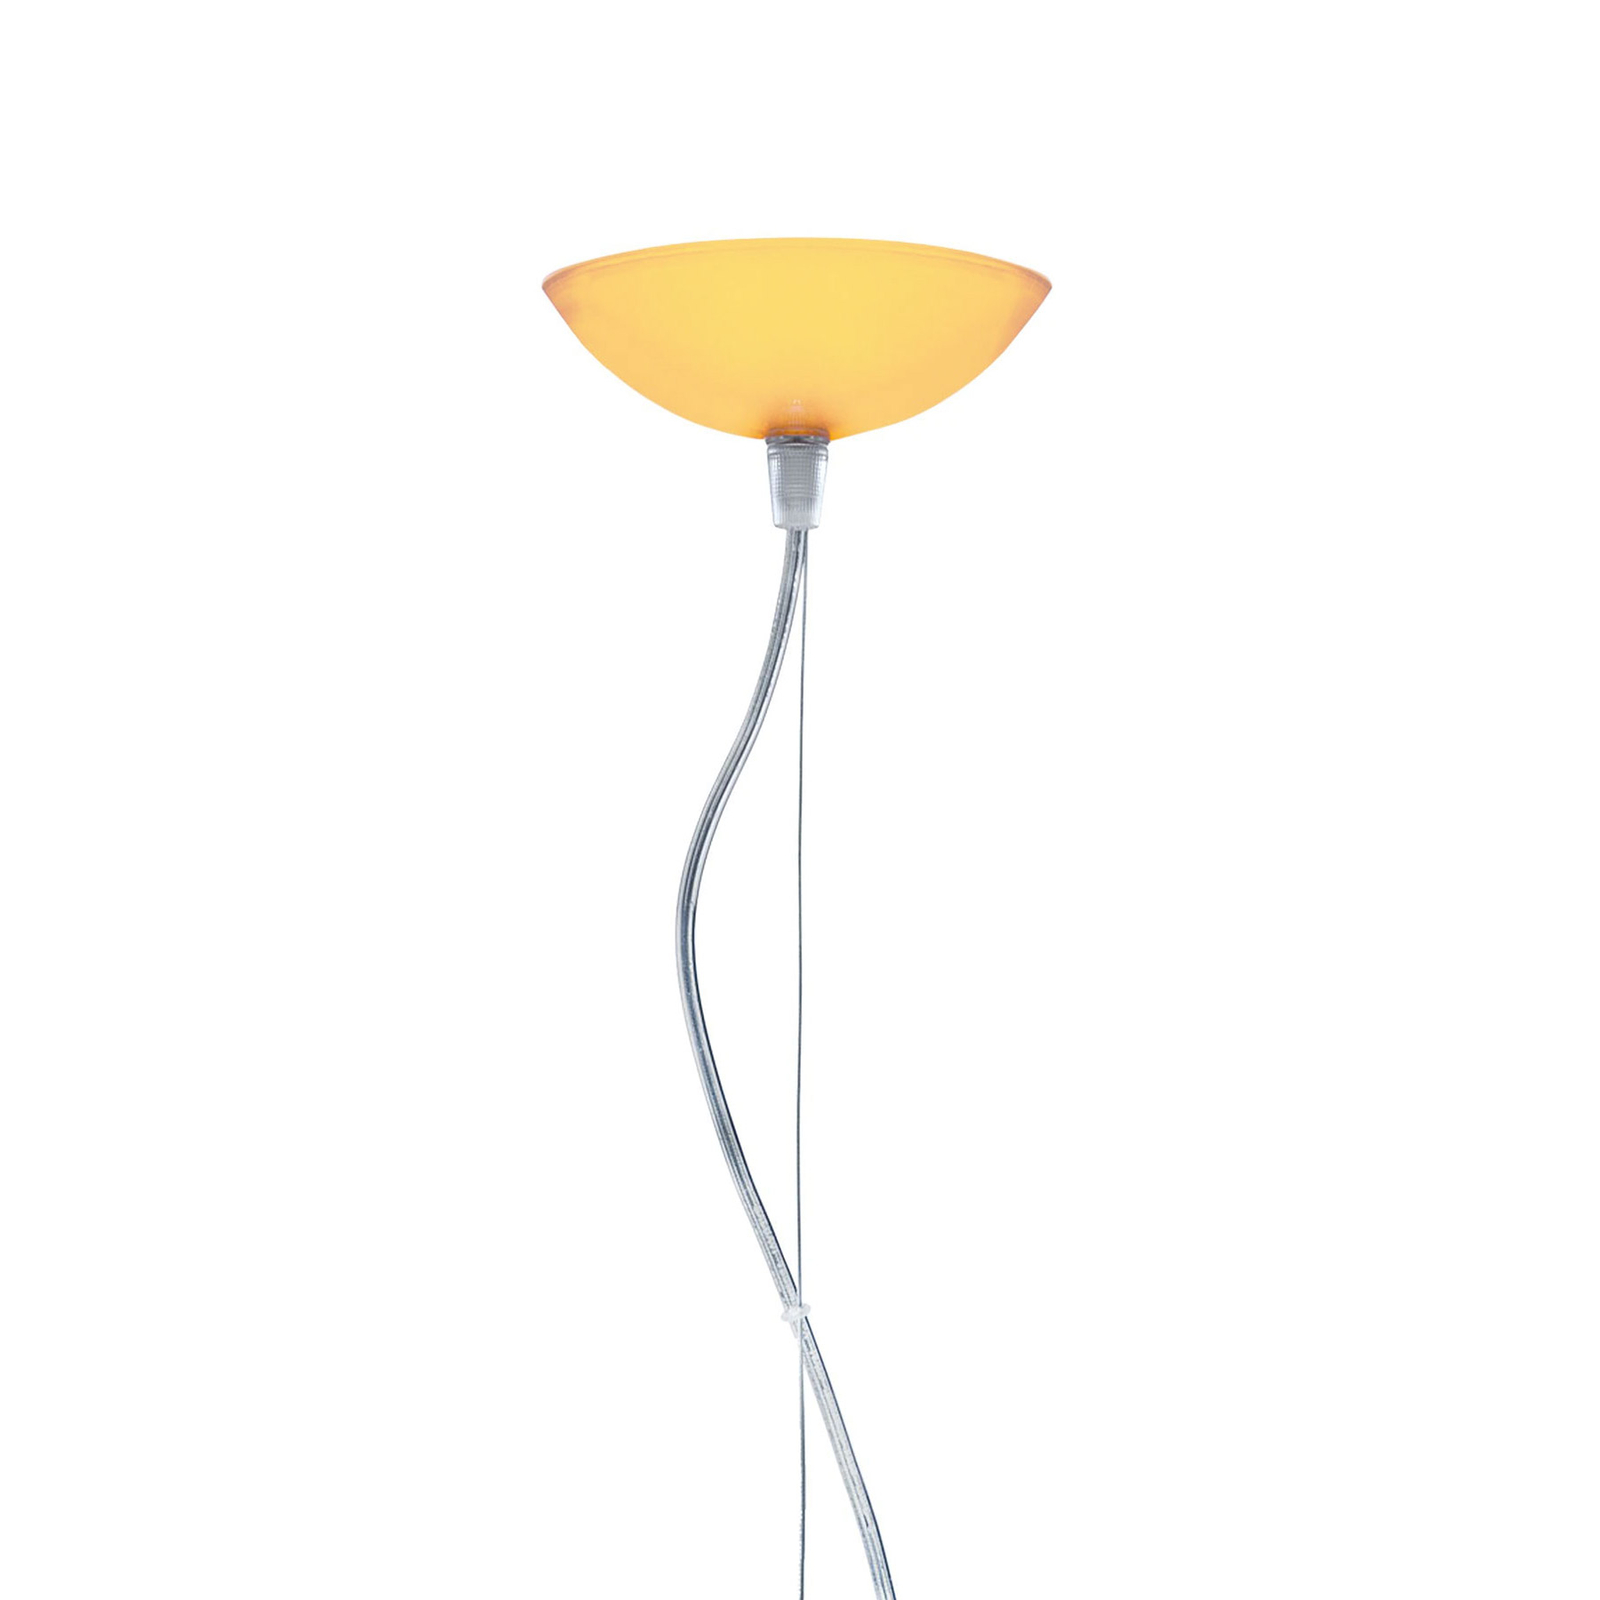 Kartell FL/Y hanglamp, Ø 52 cm, barnsteen